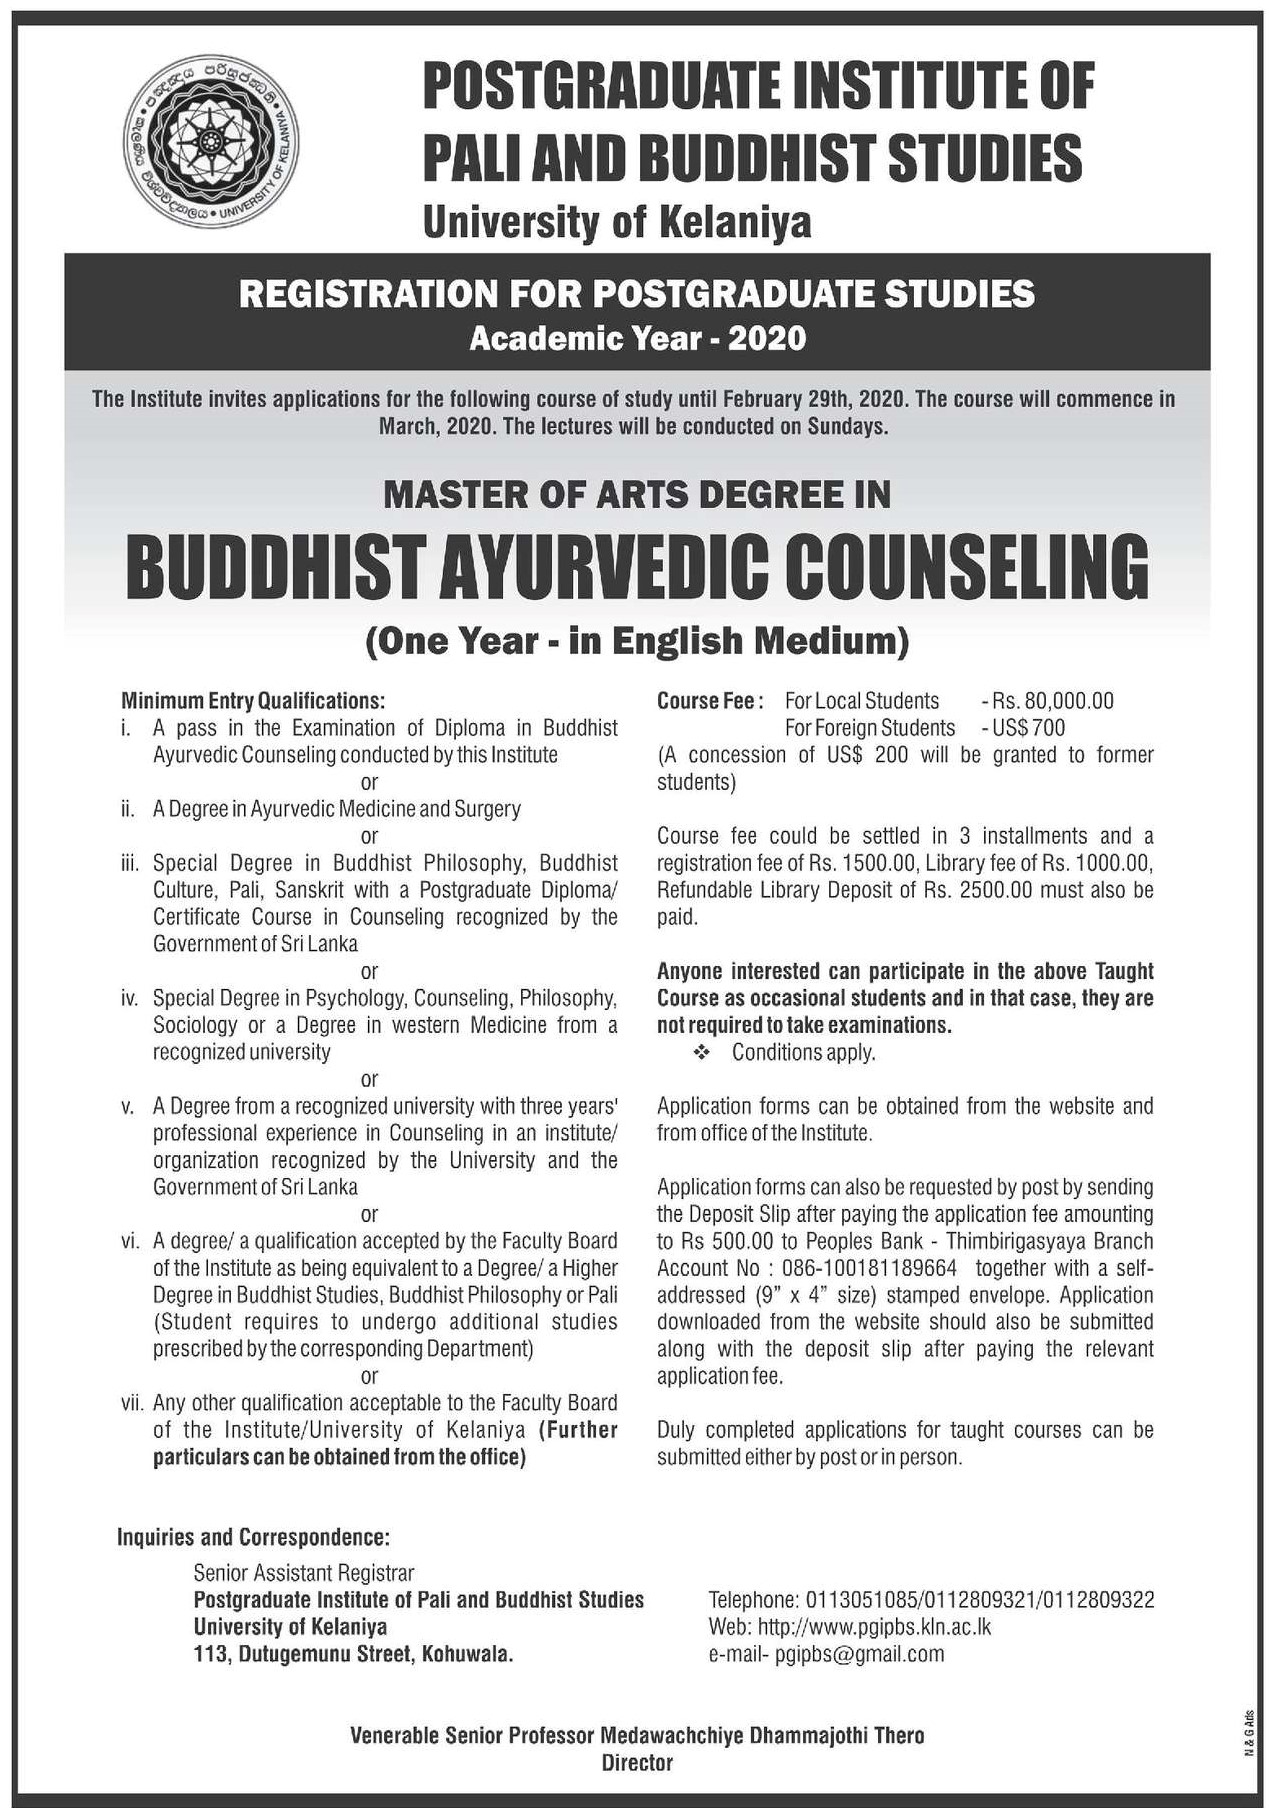 Master of Arts Degree in Buddhist Ayurvedic Counseling - Postgraduate Institute of Pali & Buddhist Studies - University of Kelaniya